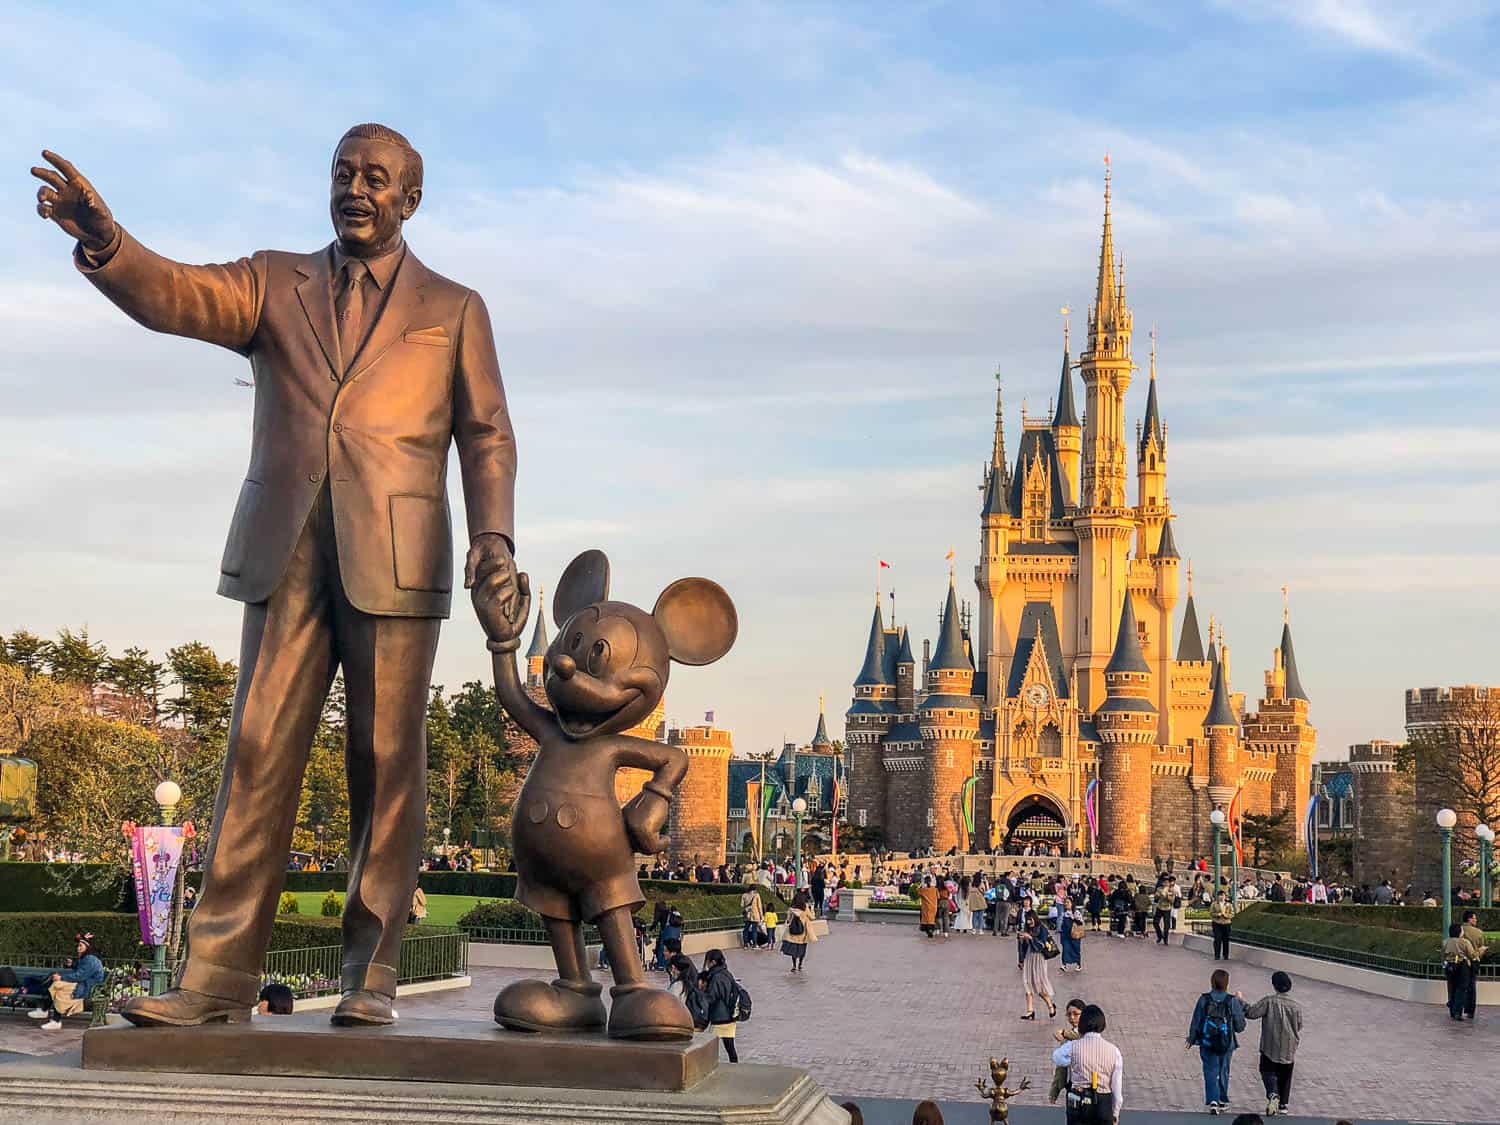 What 'Disney adults' do at Walt Disney World